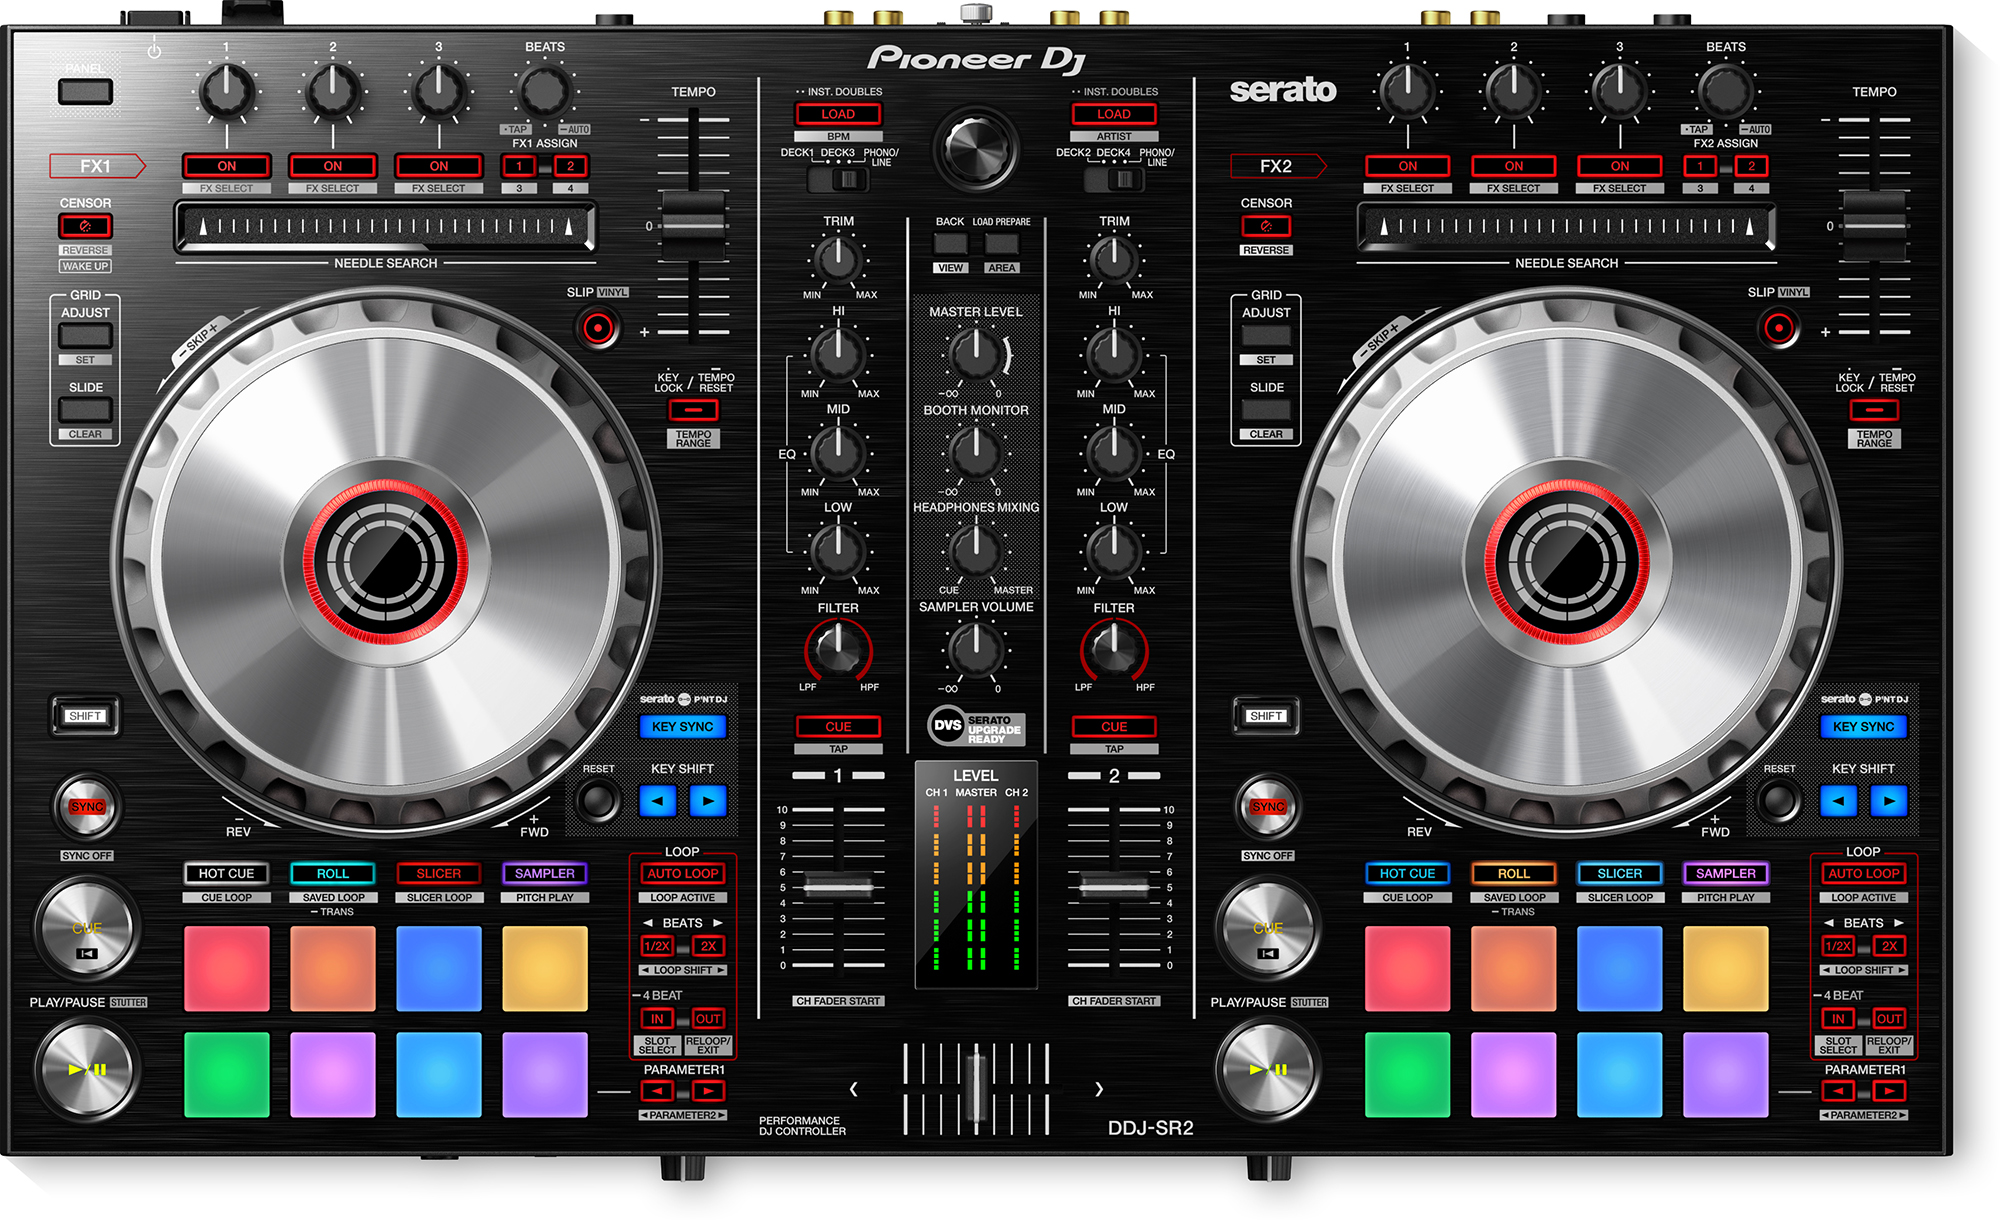 PIONEER : DDJ-SR2 Portable 2-channel controller for Serato DJ Pro เครื่องเล่นดีเจ